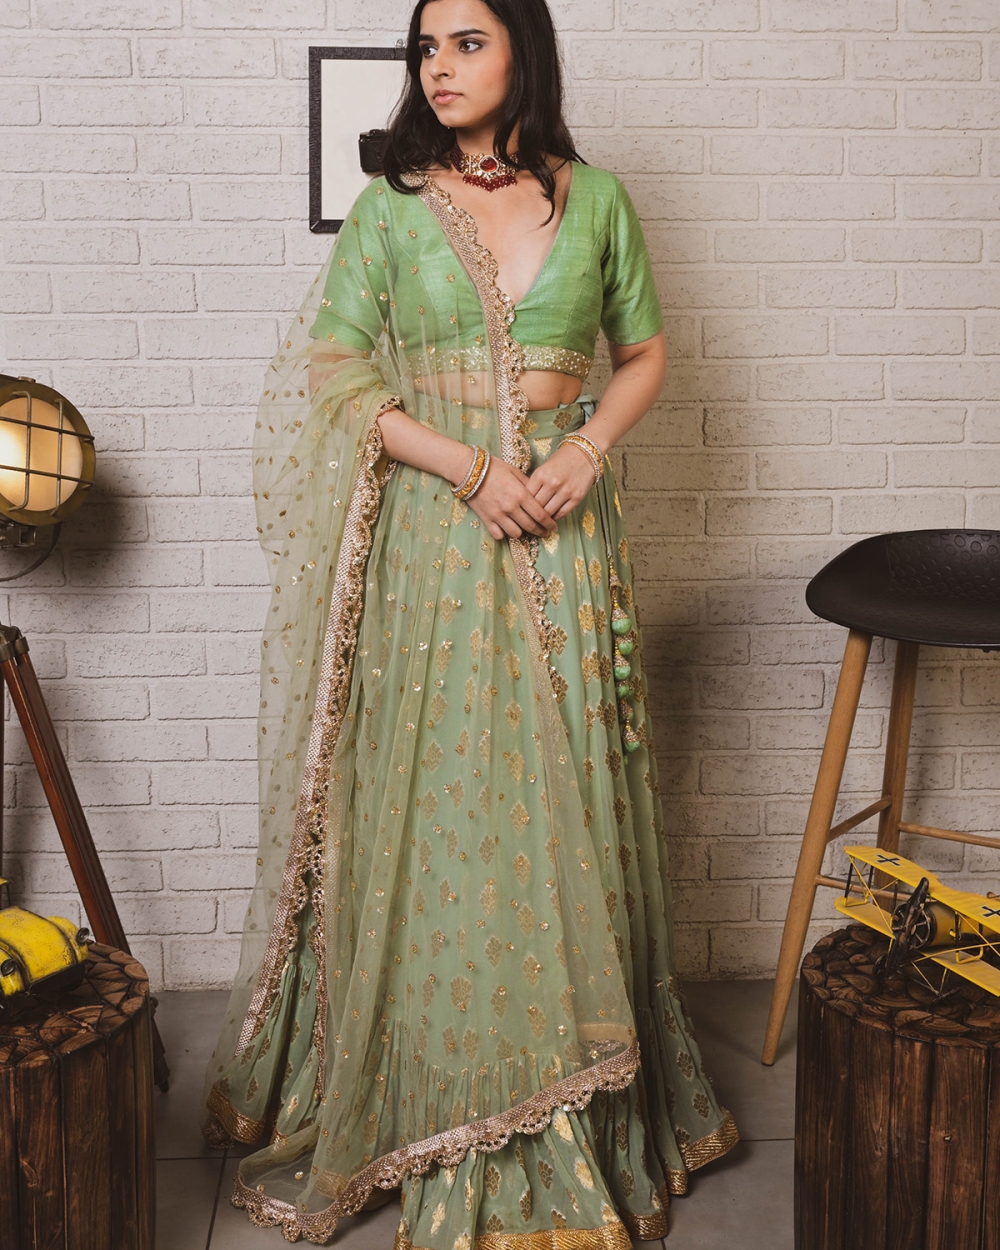 Fern Green Lehenga Set - Fashion Brand & Designer Priti Sahni